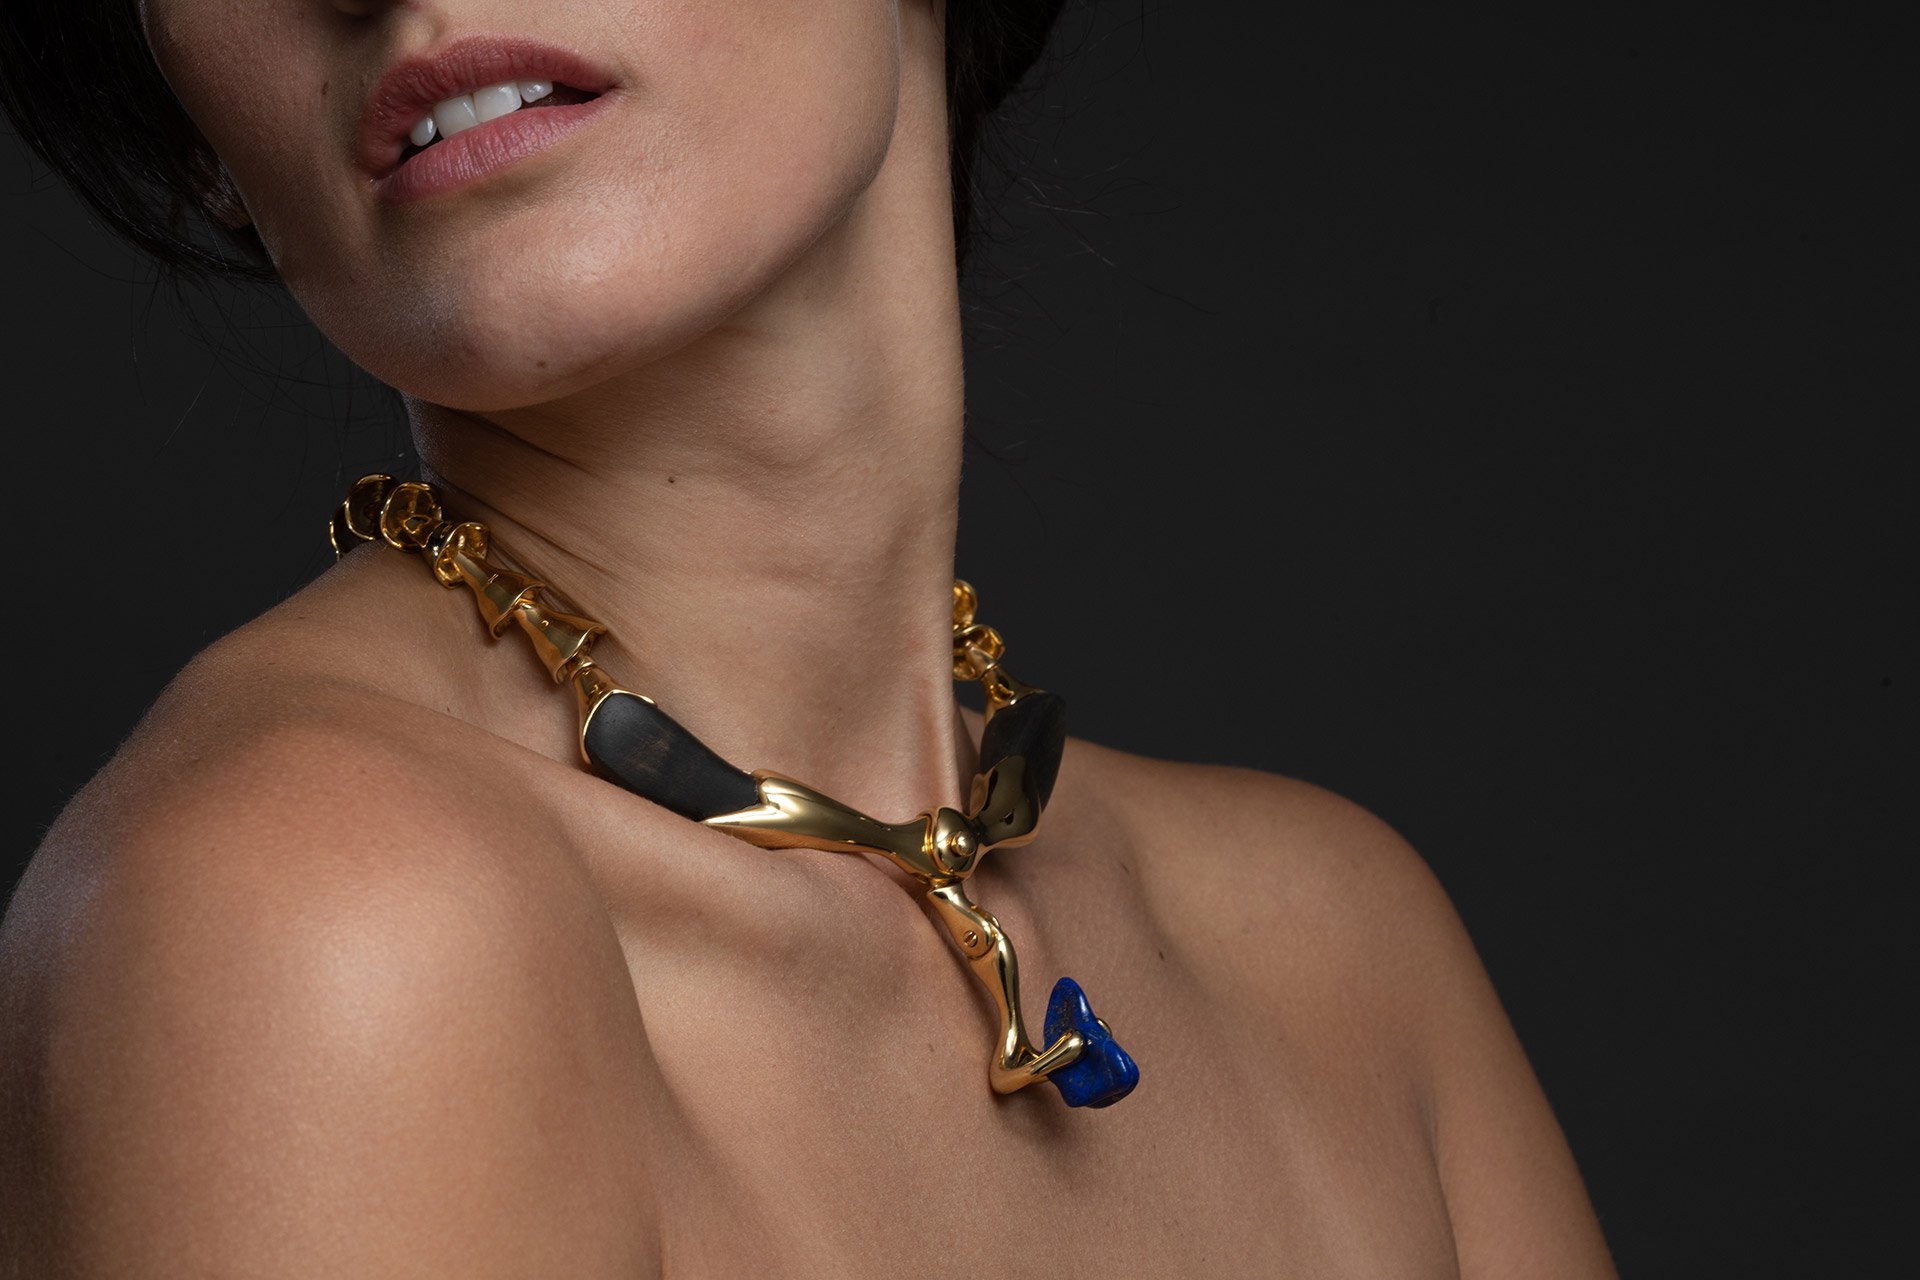 egypt-necklaces-collection-julio-martinez-barnetche-marion-friedmann-gallery-LR-egypt41.jpg